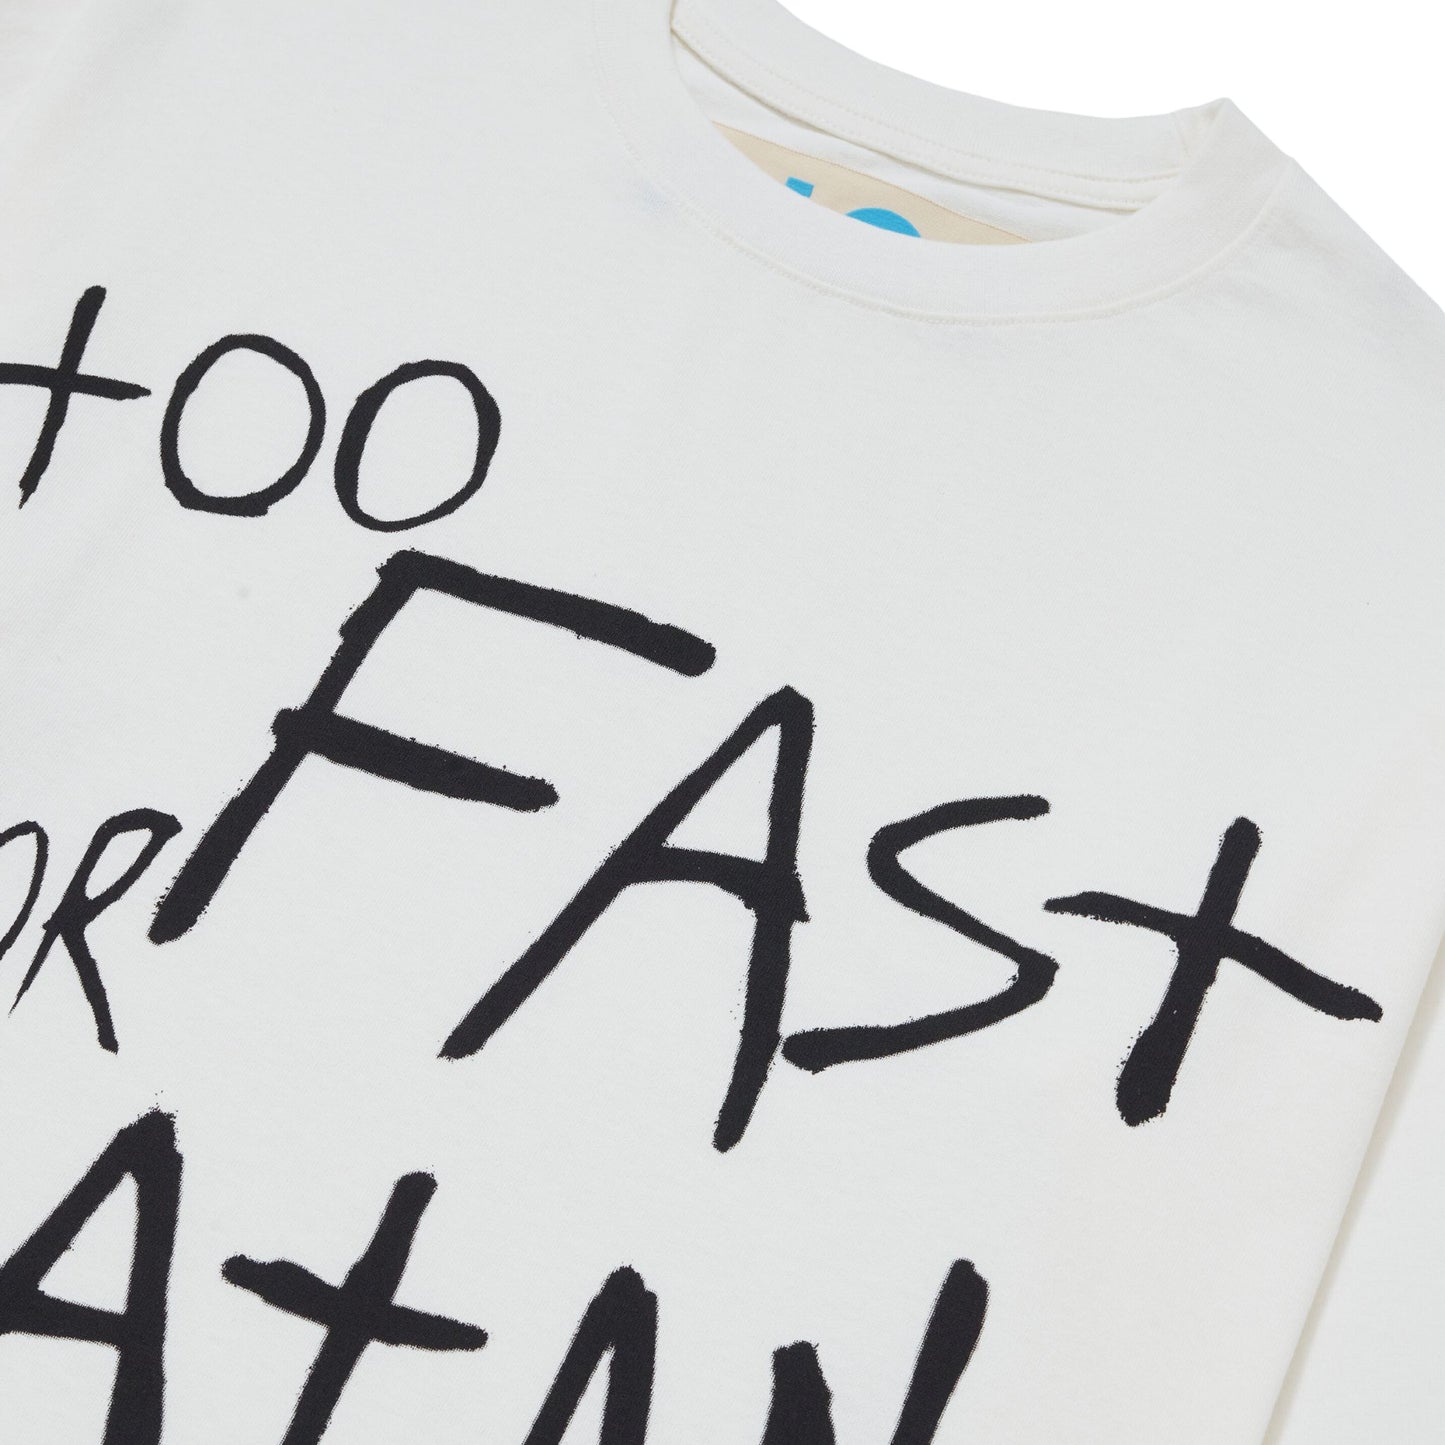 PIET - Camiseta Too Fast "Off White" - THE GAME